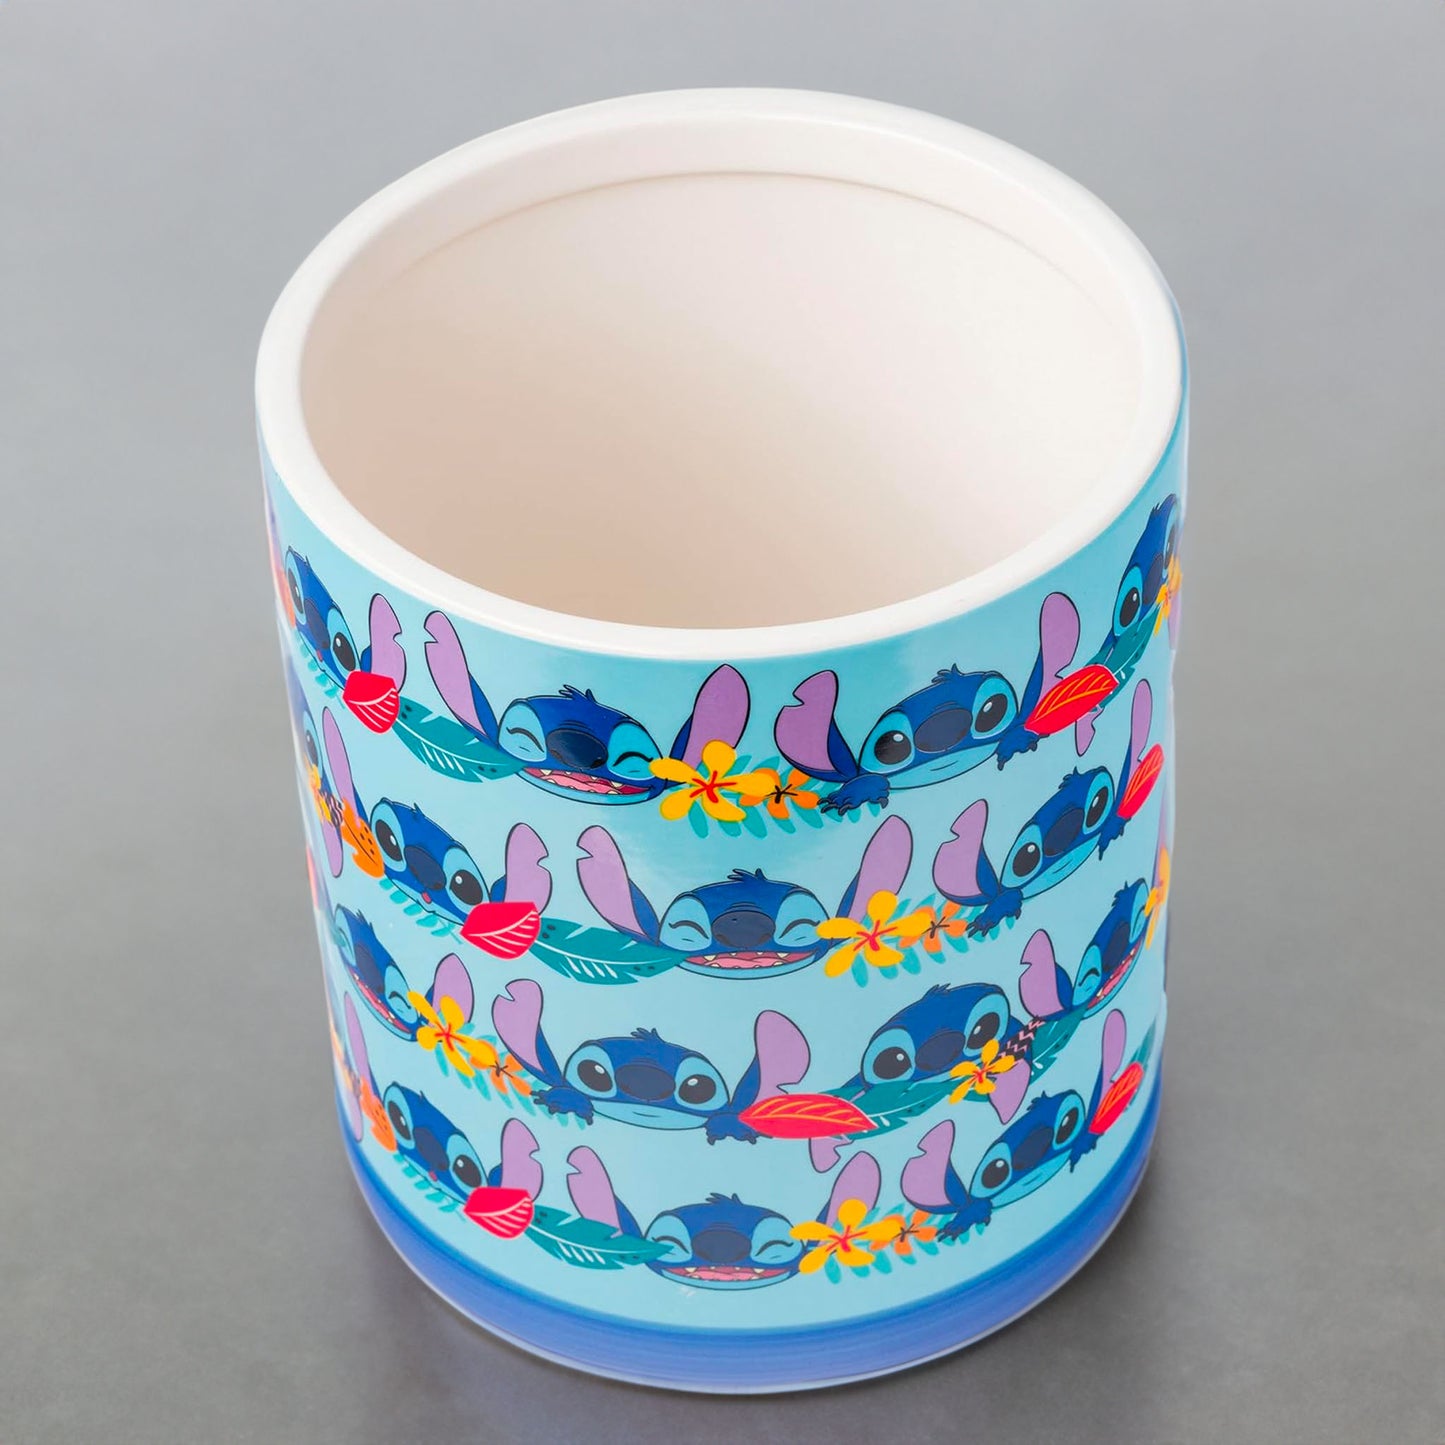 Lilo and Stitch (Disney) Ceramic Cookie Jar